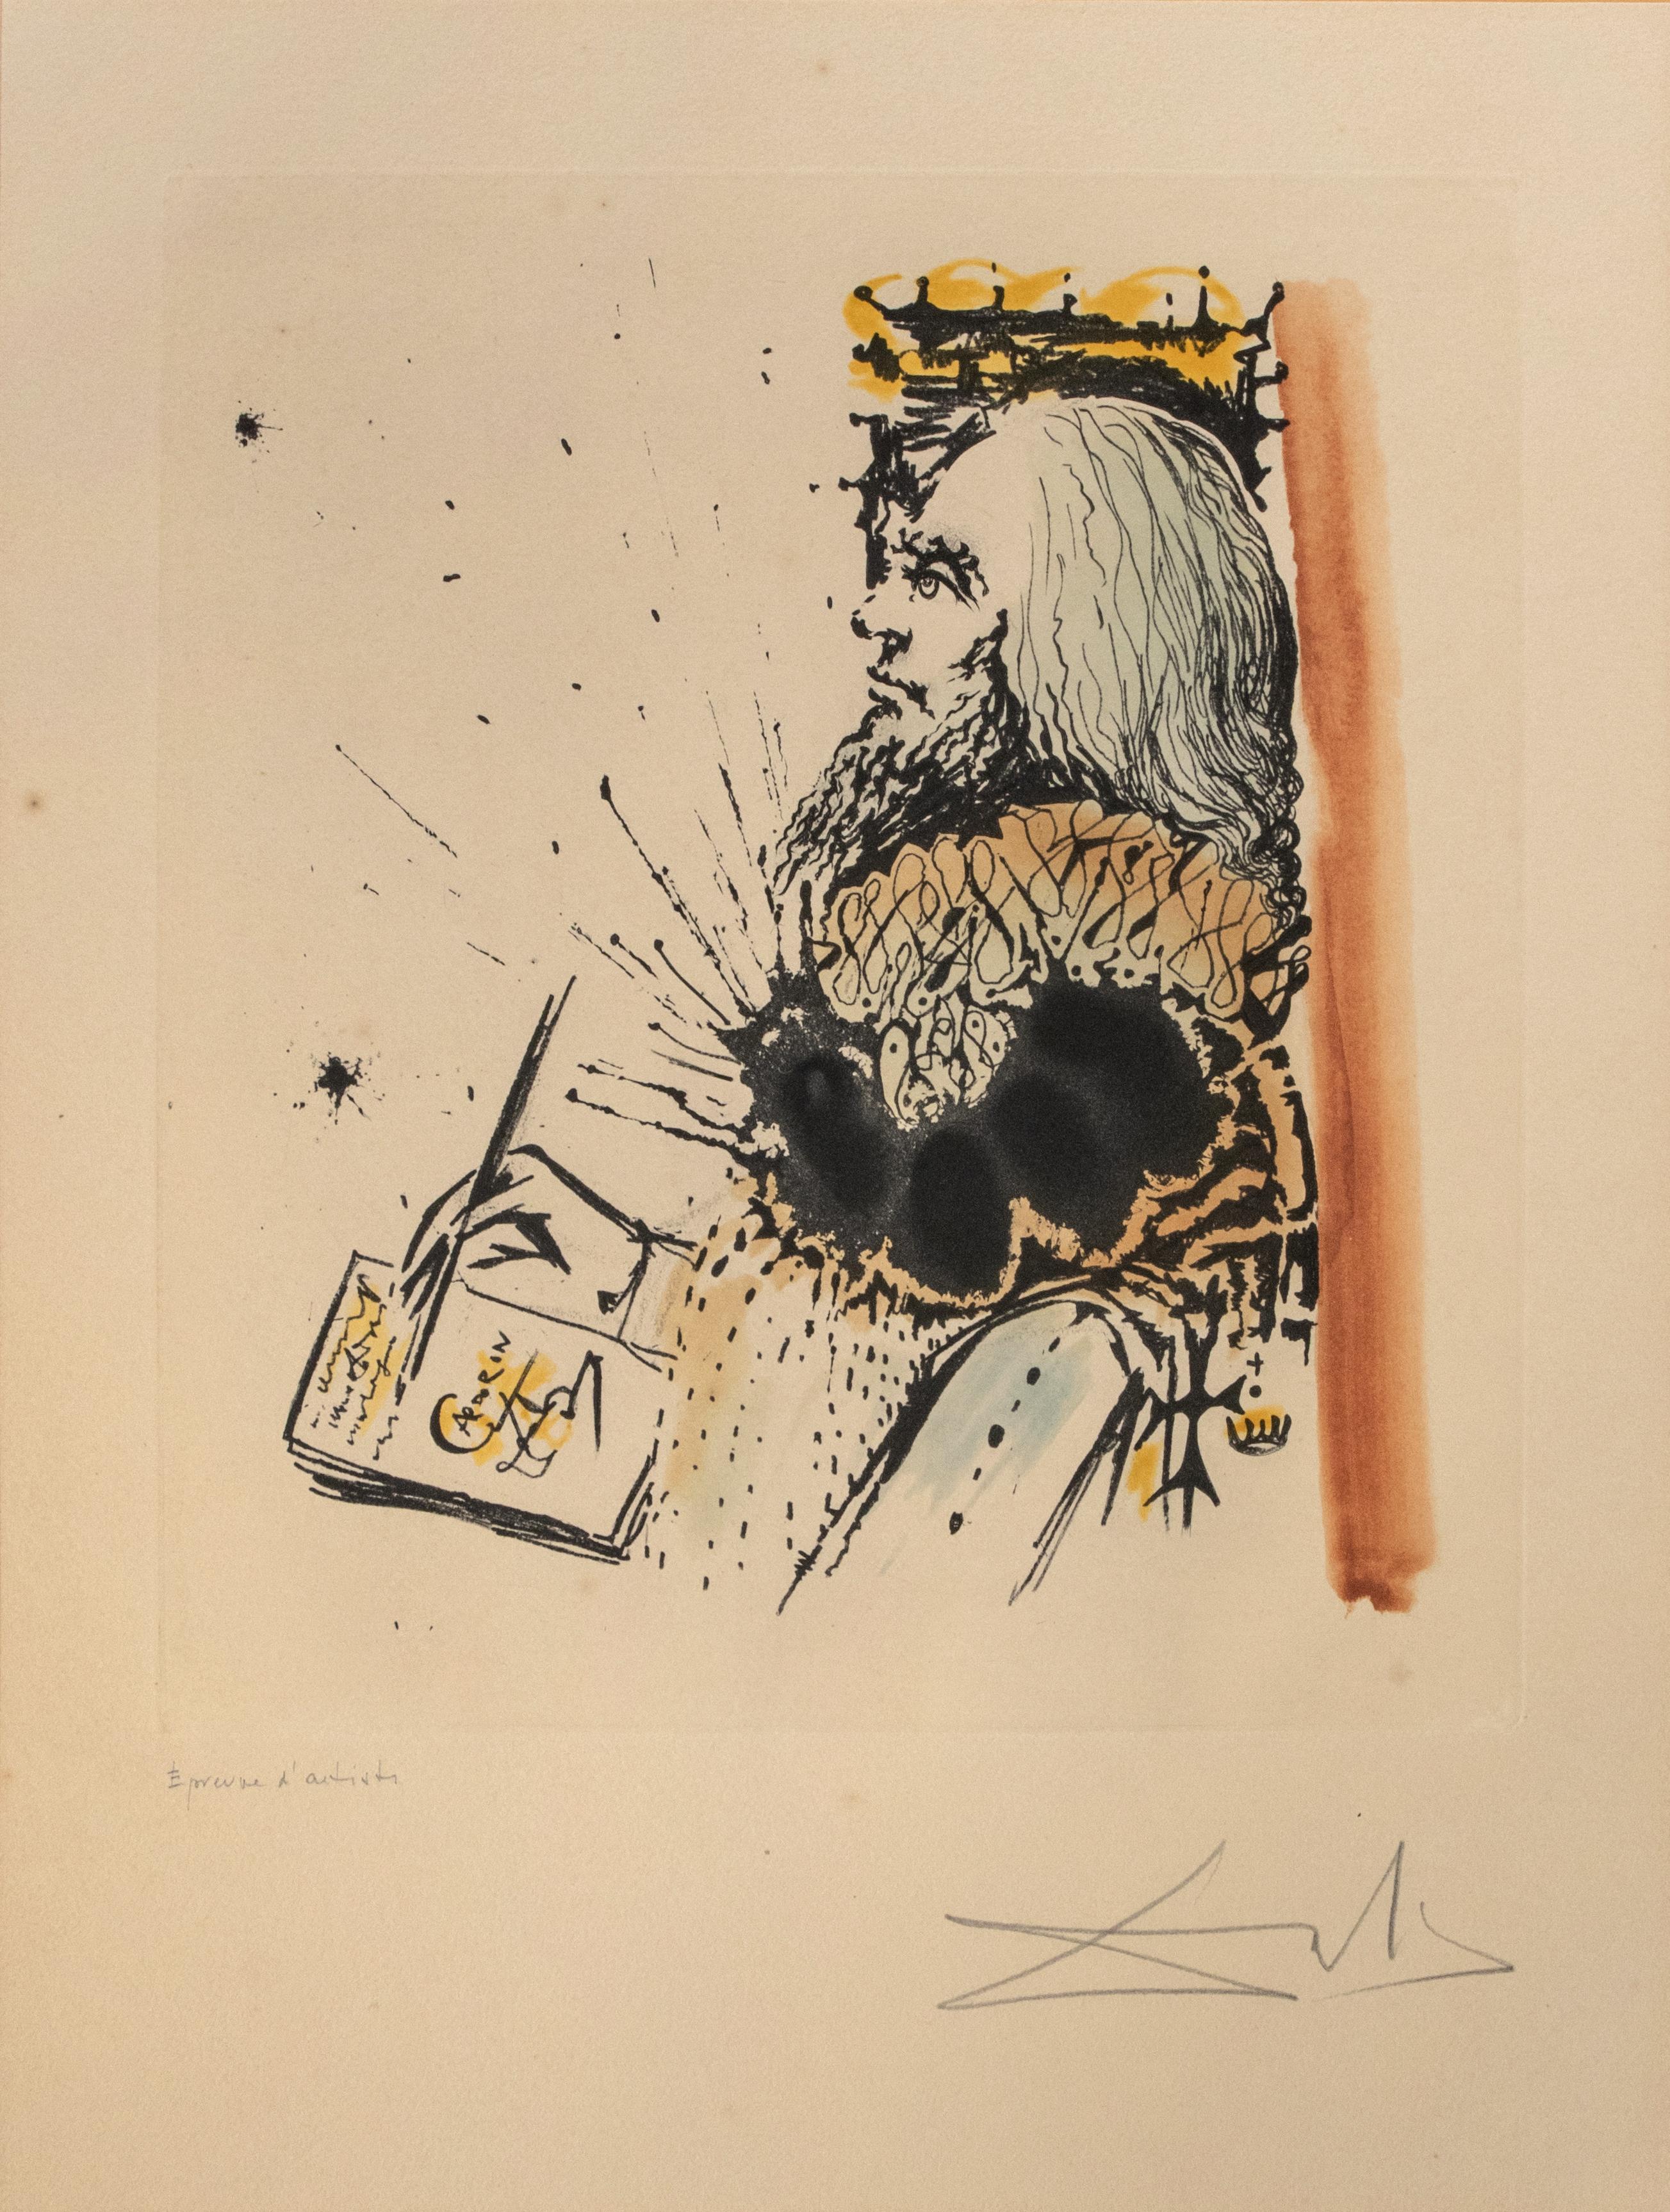 Salvador Dalí Portrait Print - Portrait de Calderon - Aquatint and Etching attr. to Salvador Dalì - 1971